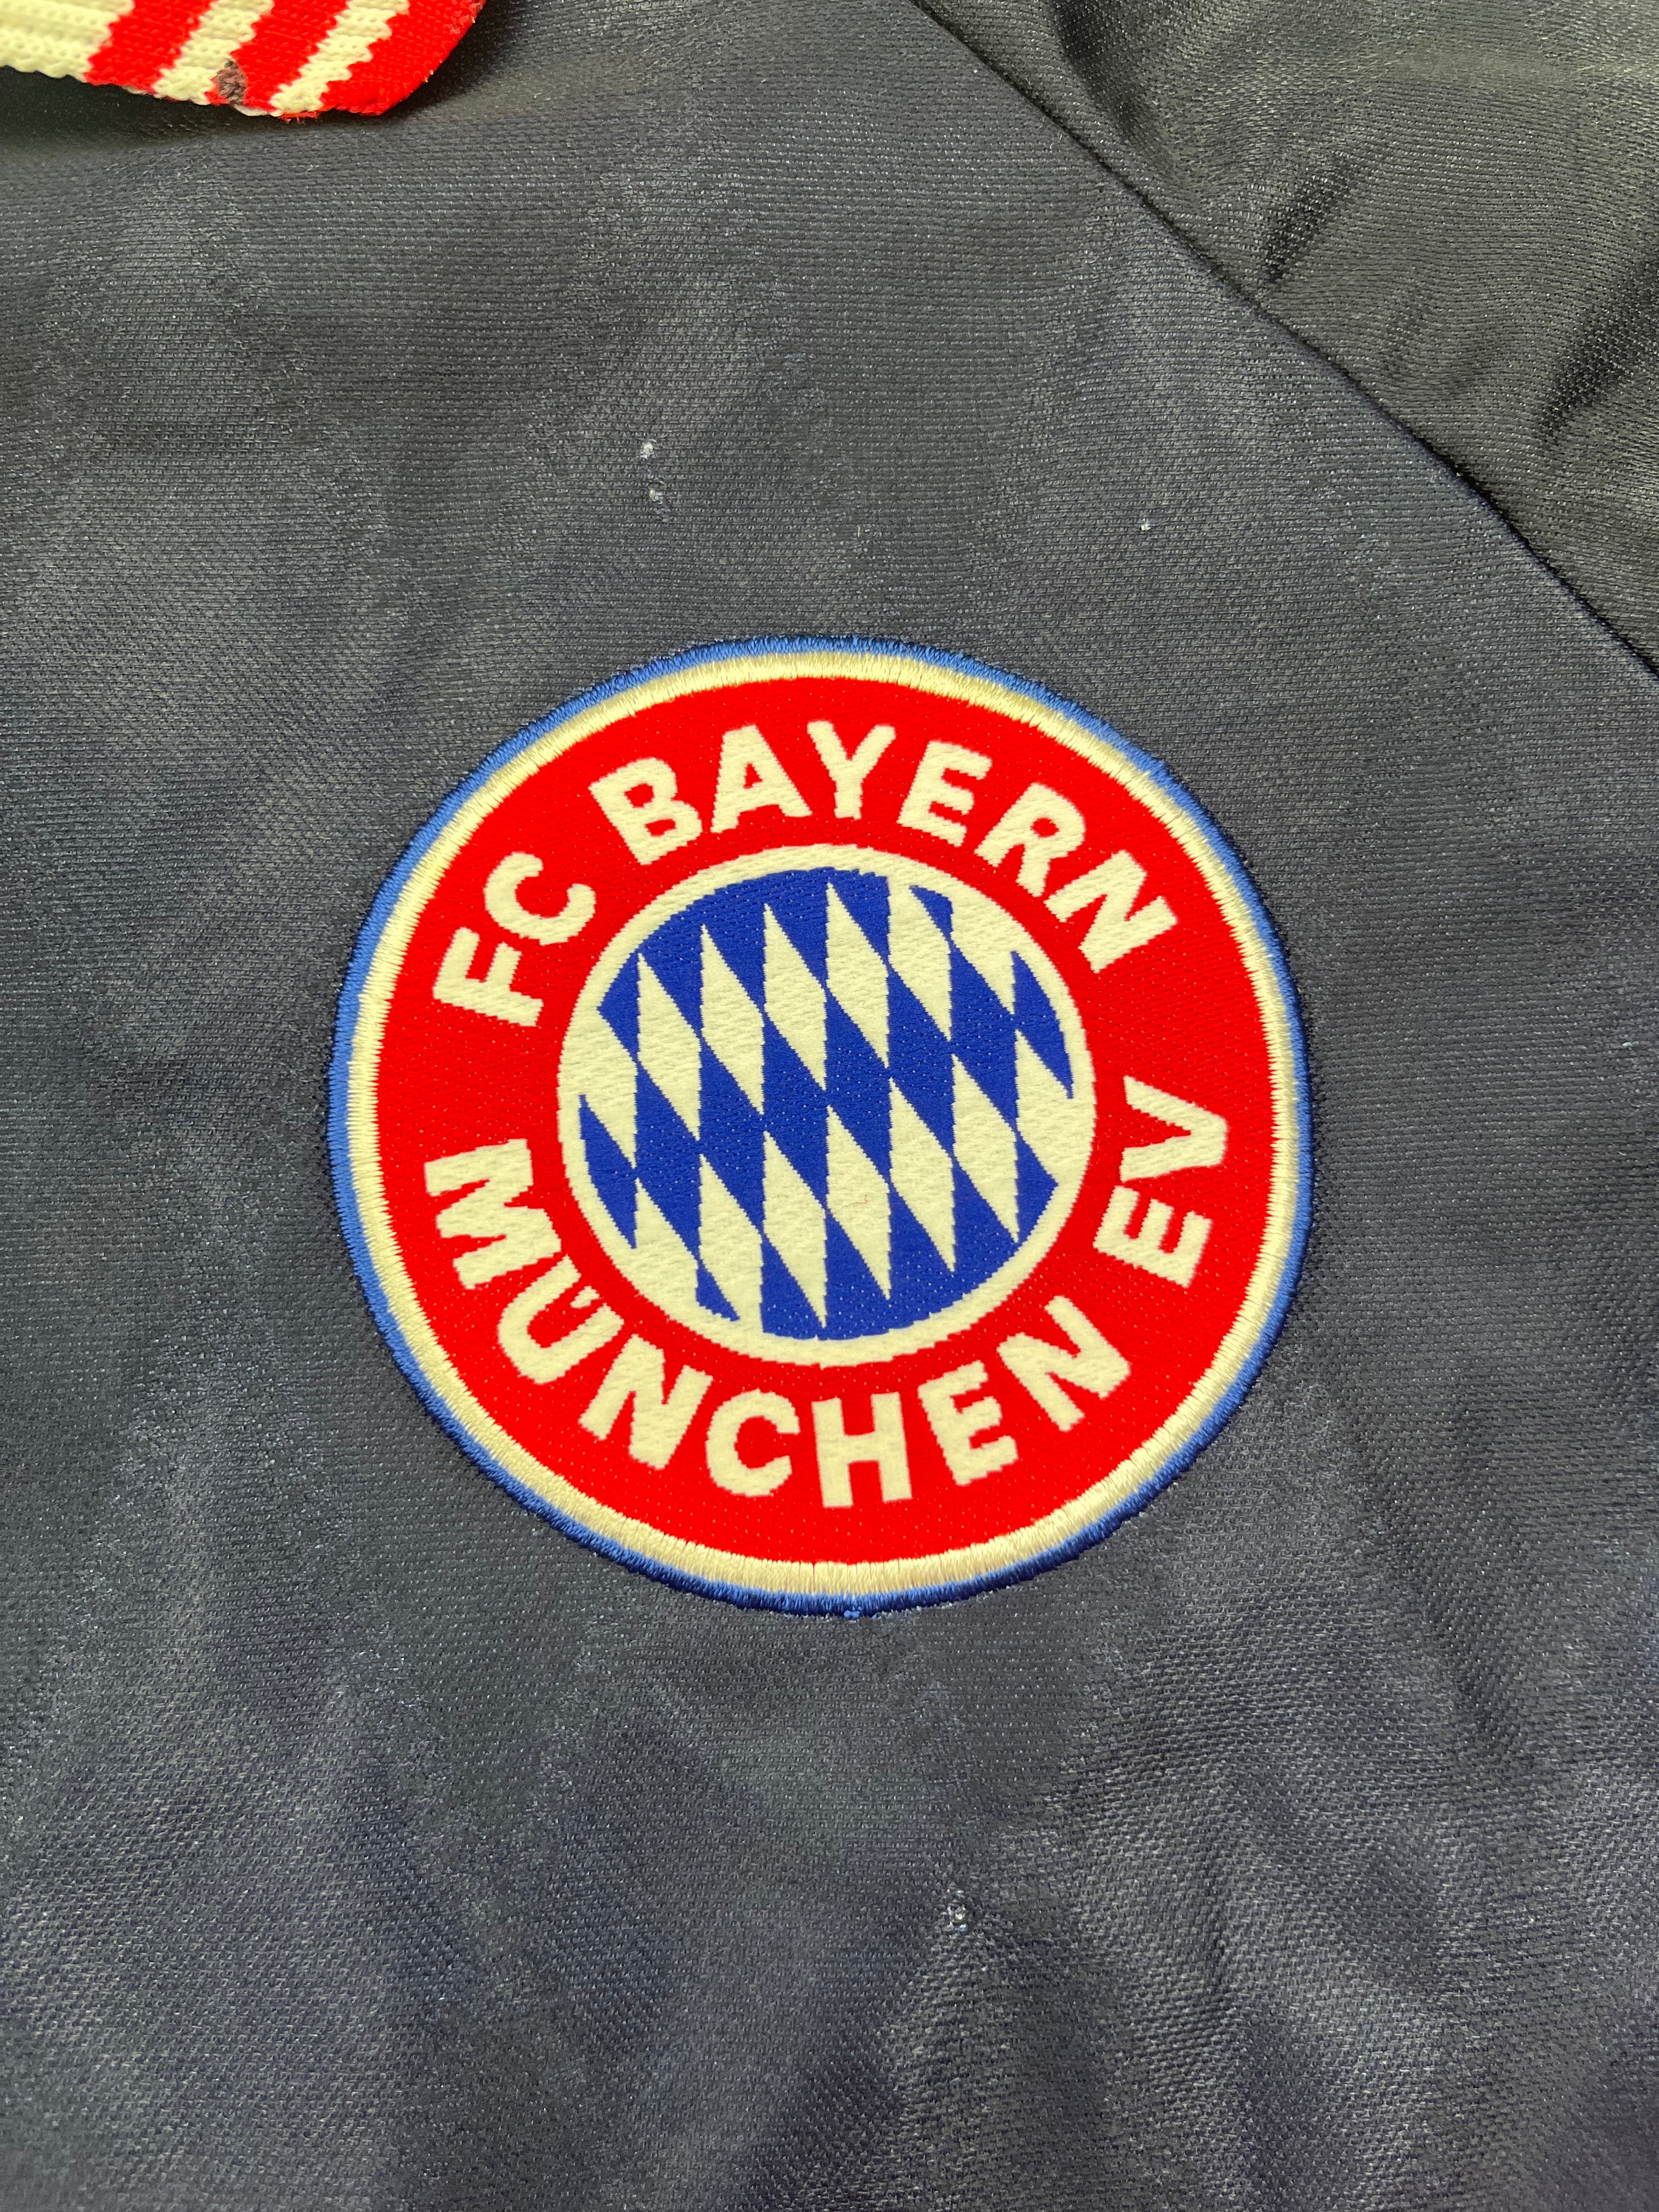 1997/99 Bayern Munich Home Shirt Elber #9 (XXL) 7.5/10